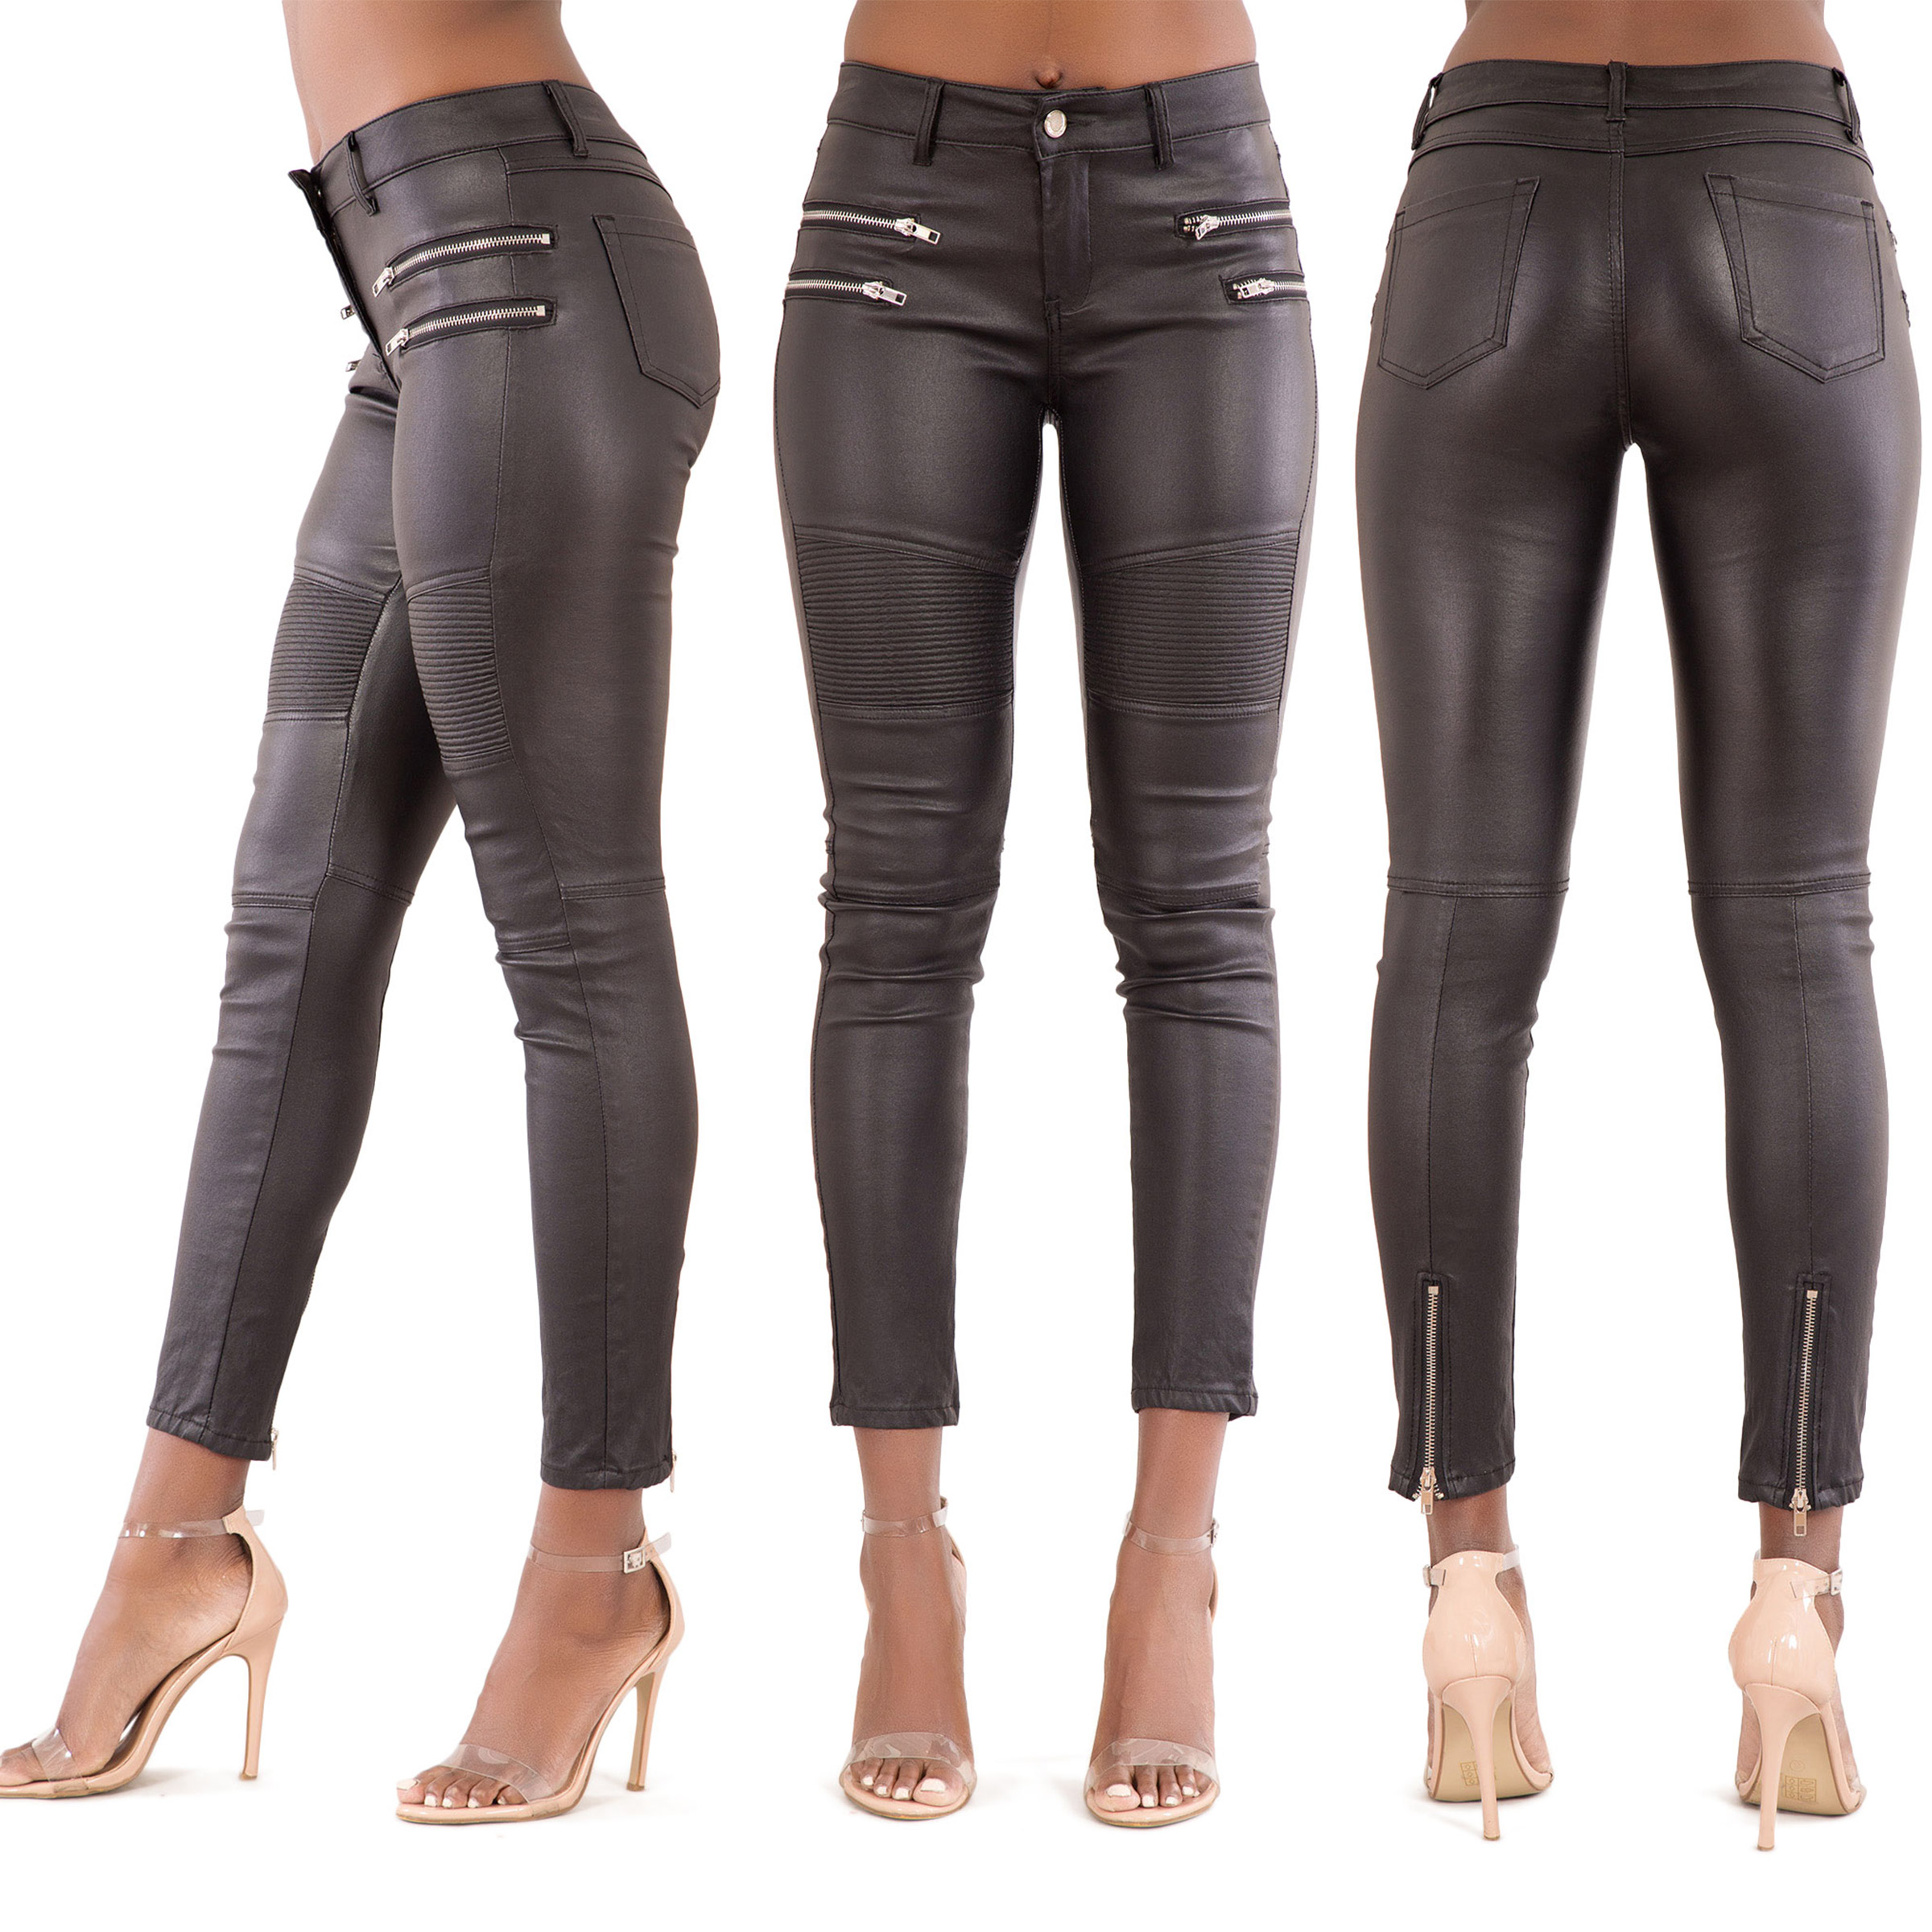 Ladies Celeb Style Black Wet Look Leather Biker Jeans Trousers Size 6 8 10 12 14 Ebay